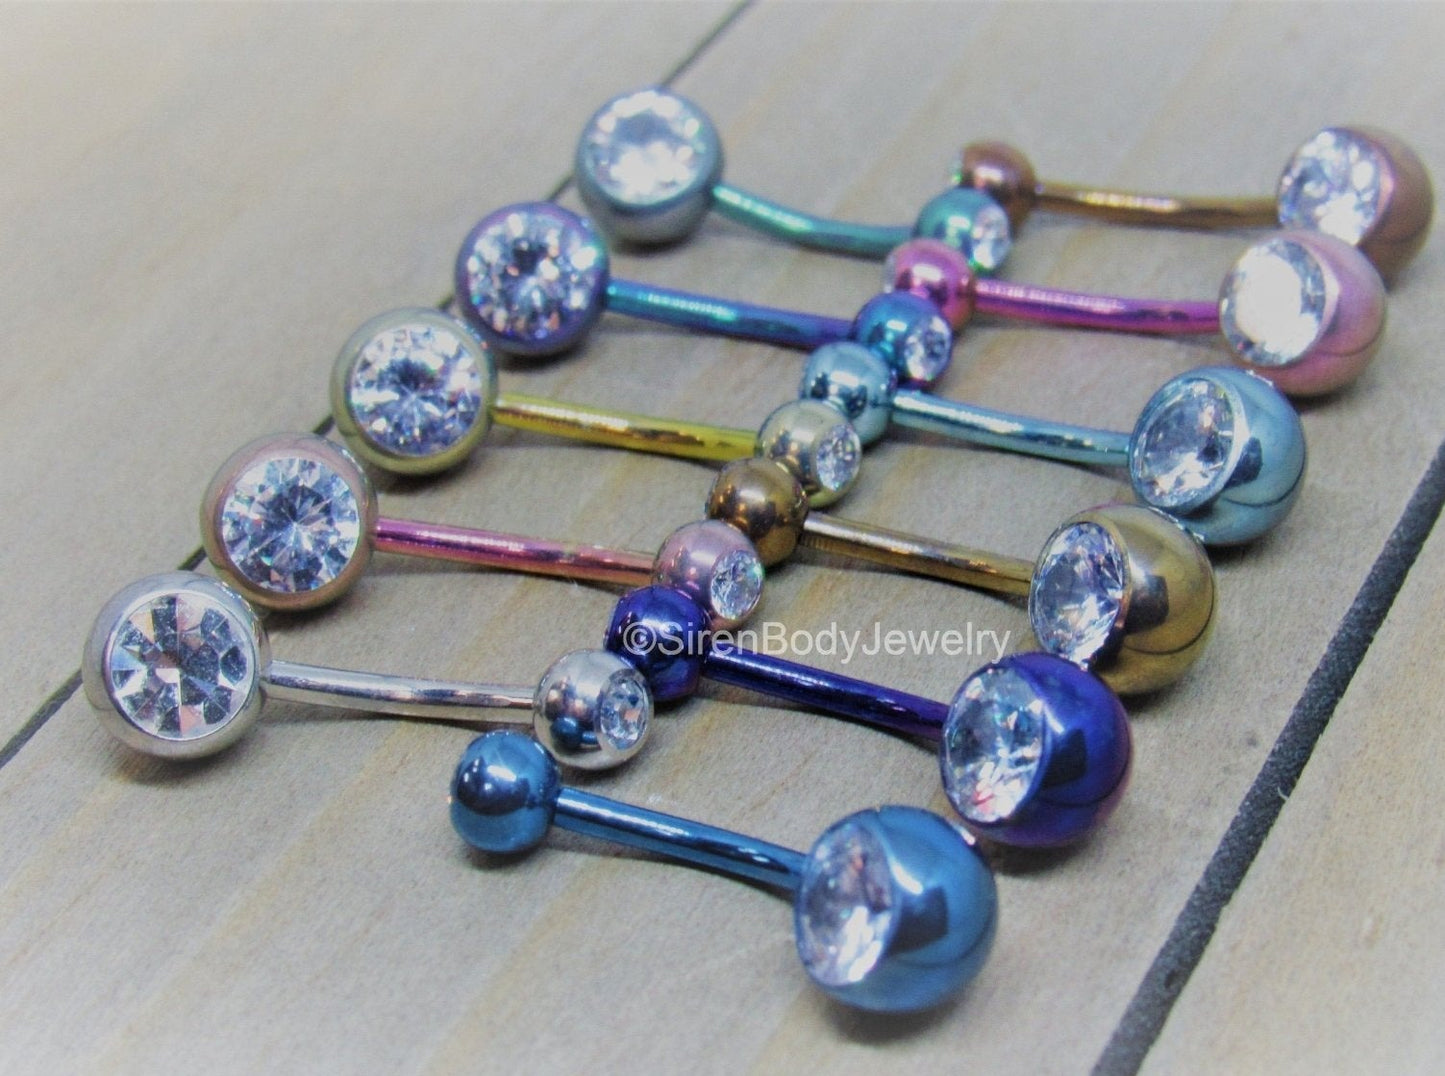 14g 7/16" clear cz gemstone titanium belly button piercing rings